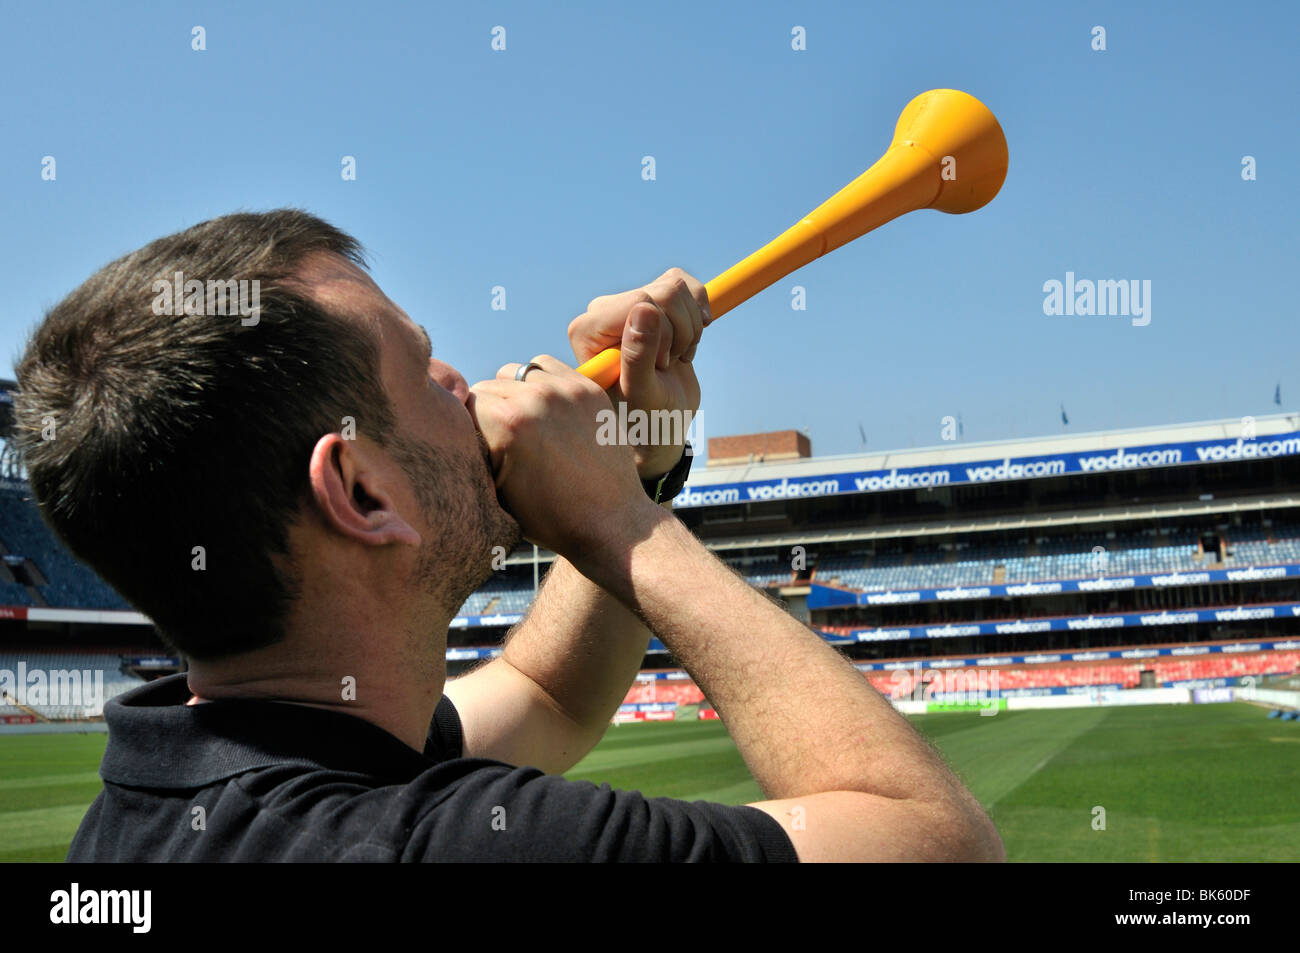 https://c8.alamy.com/comp/BK60DF/2010-fifa-world-cup-soccer-fan-with-a-vuvuzela-the-musical-instrument-BK60DF.jpg